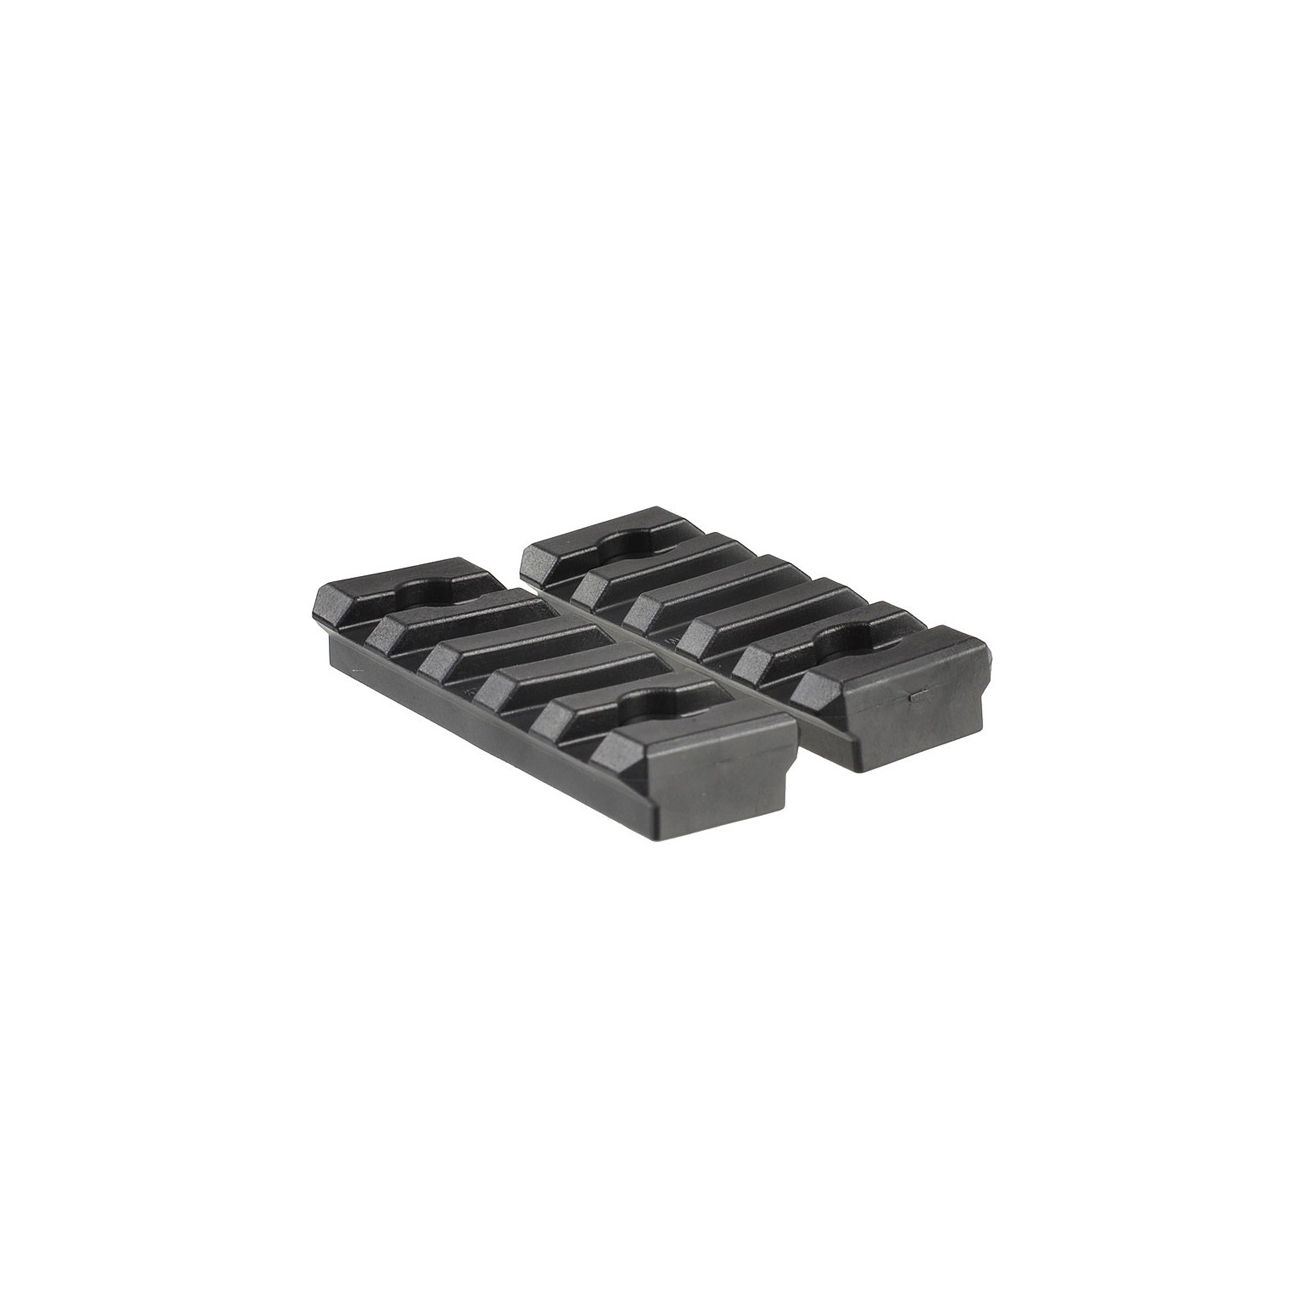 MadBull / Strike Industries KeyMod 21mm Polymer Schiene 5 Slots / 59mm (2) schwarz Bild 1